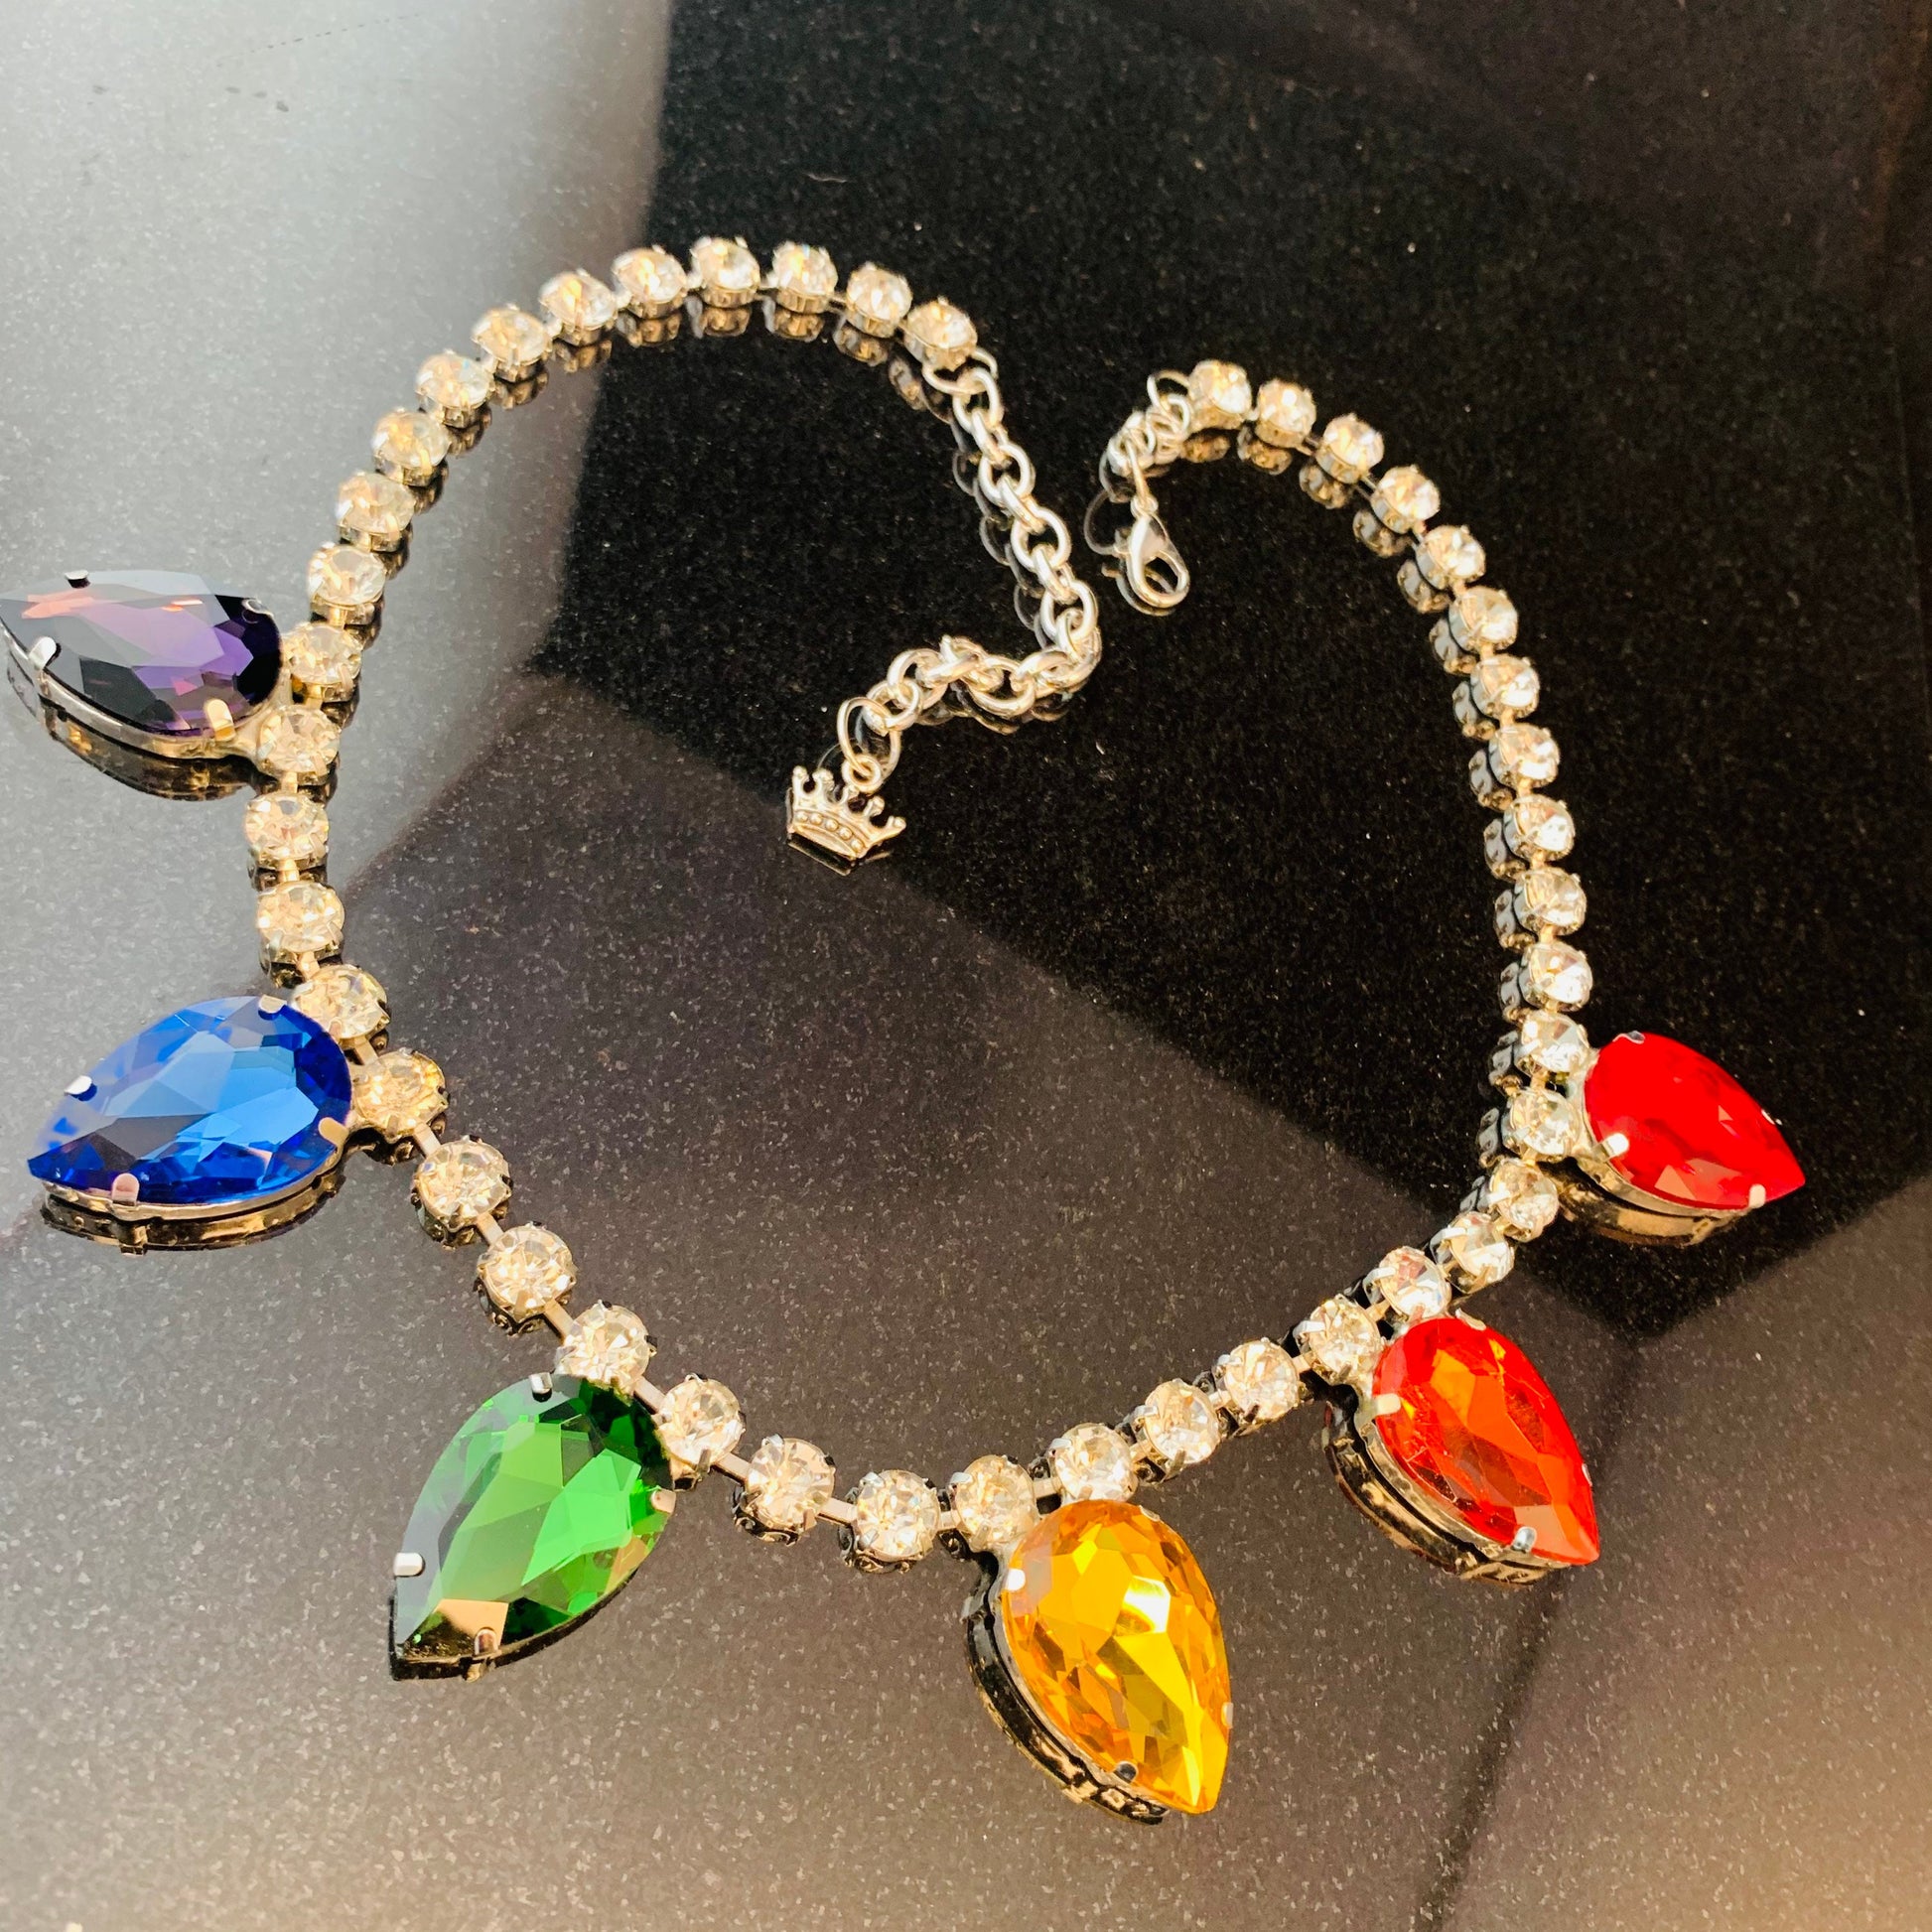 Pride necklace / rainbow Necklace / Adjustable / Drag Queen Costume Jewelry / Cocktails Jewellery / Gay pride / Queer